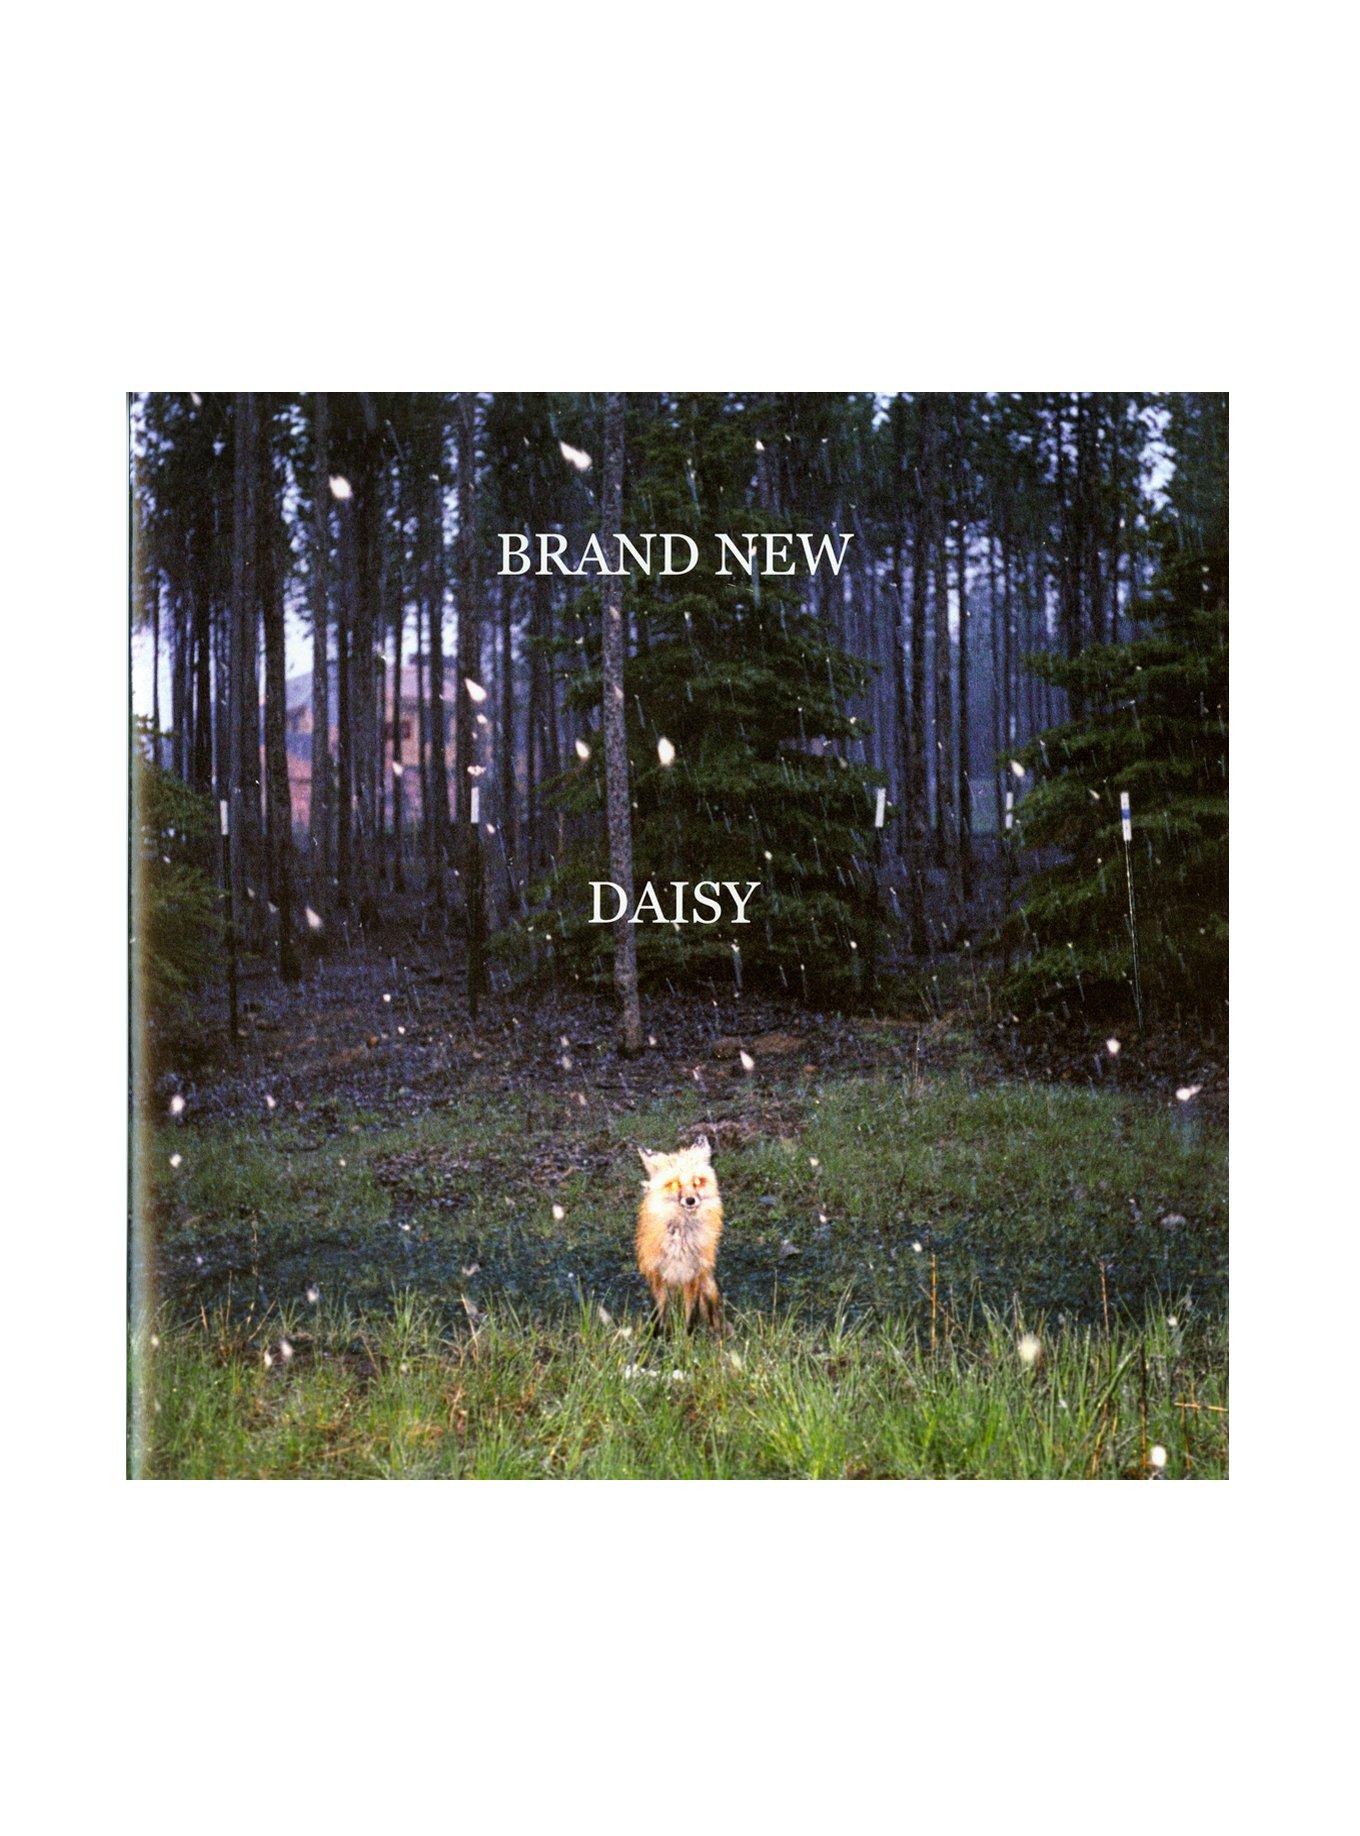 Brand New - Daisy Vinyl LP Hot Topic Exclusive